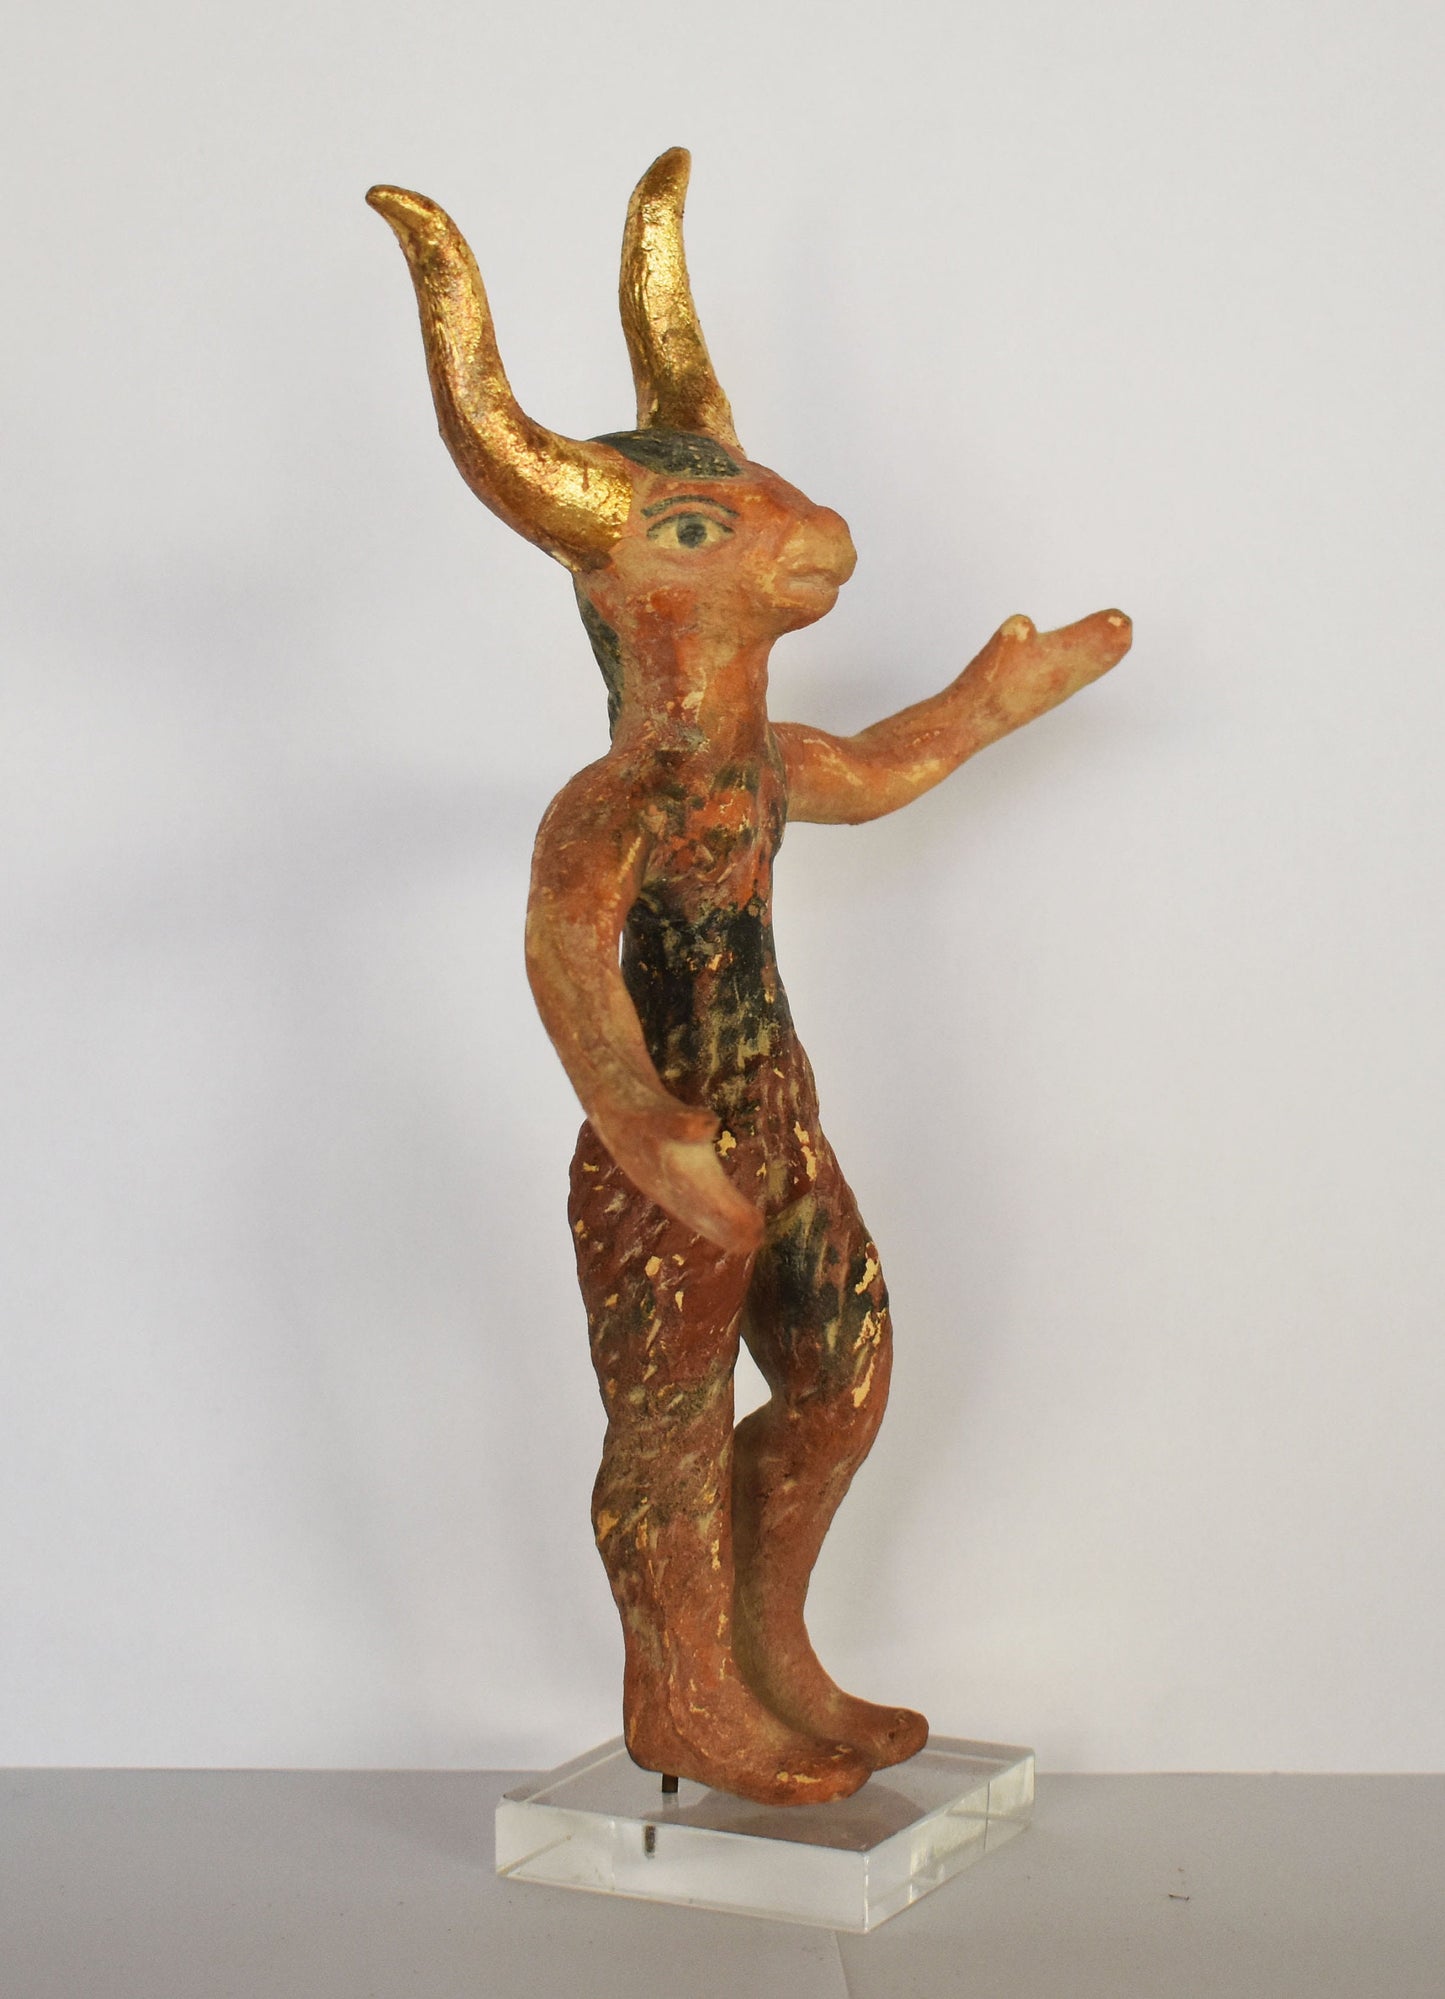 Minotaur - Mythical Creature, Half-Man, Half-Bull - Fierce and Very Strong - Labyrinth, King Minos, Crete, Theseus - Ceramic Artifact